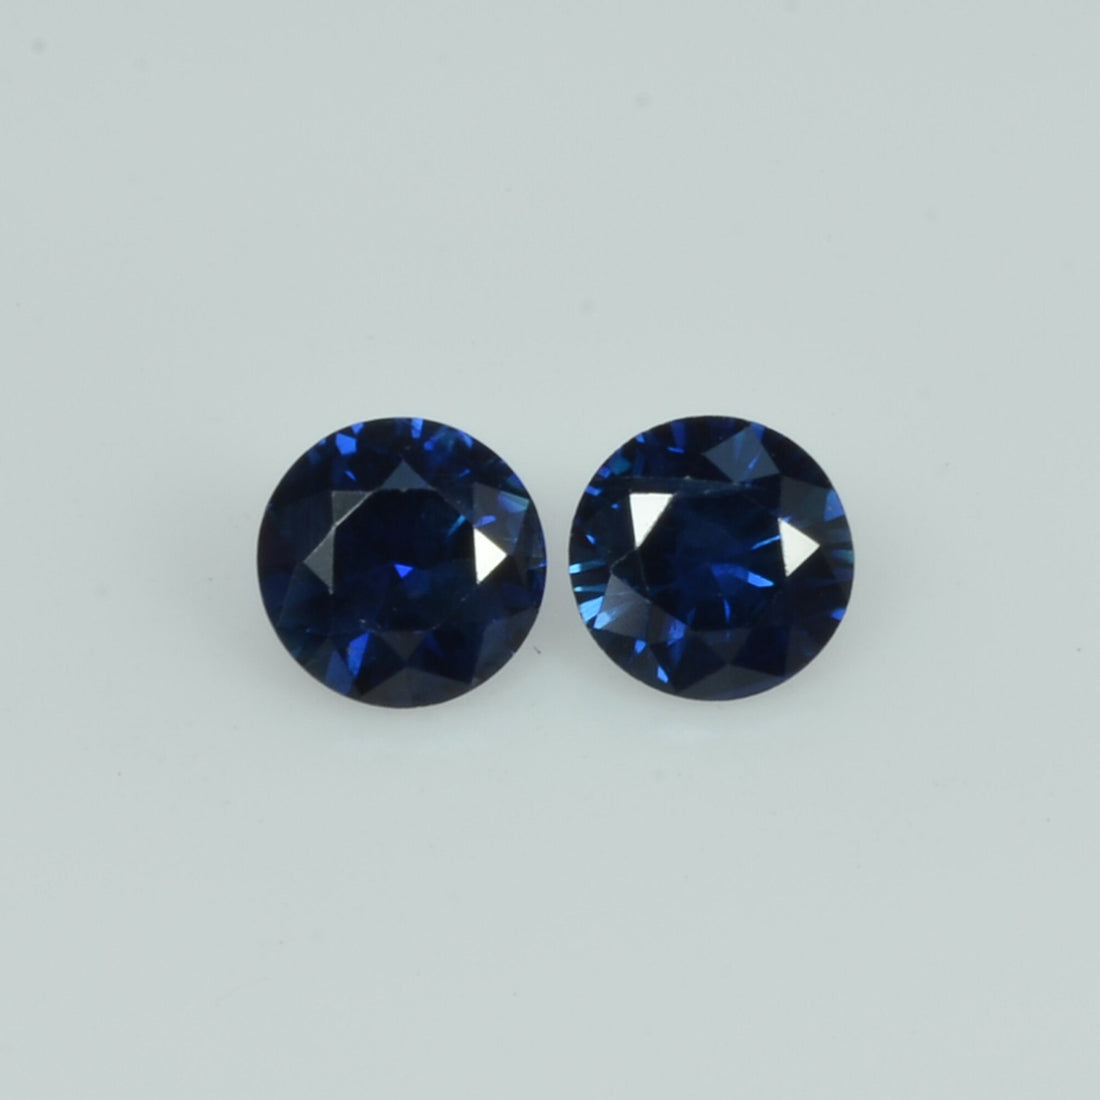 5.5 mm Natural Blue Sapphire Loose Pair Gemstone Round Cut